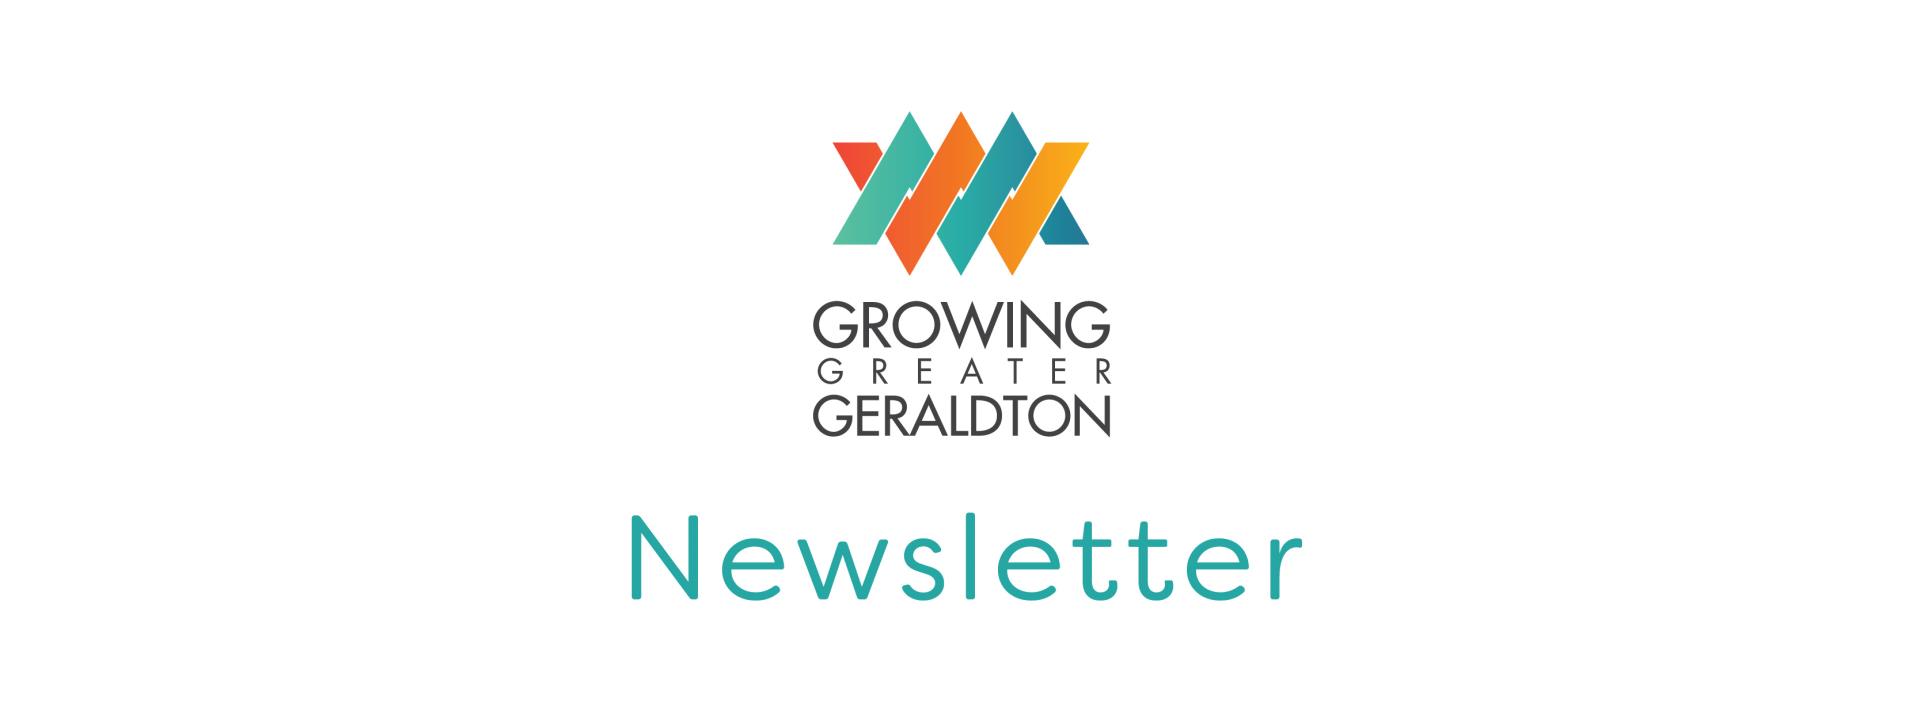 Growing Greater Geraldton Newsletter